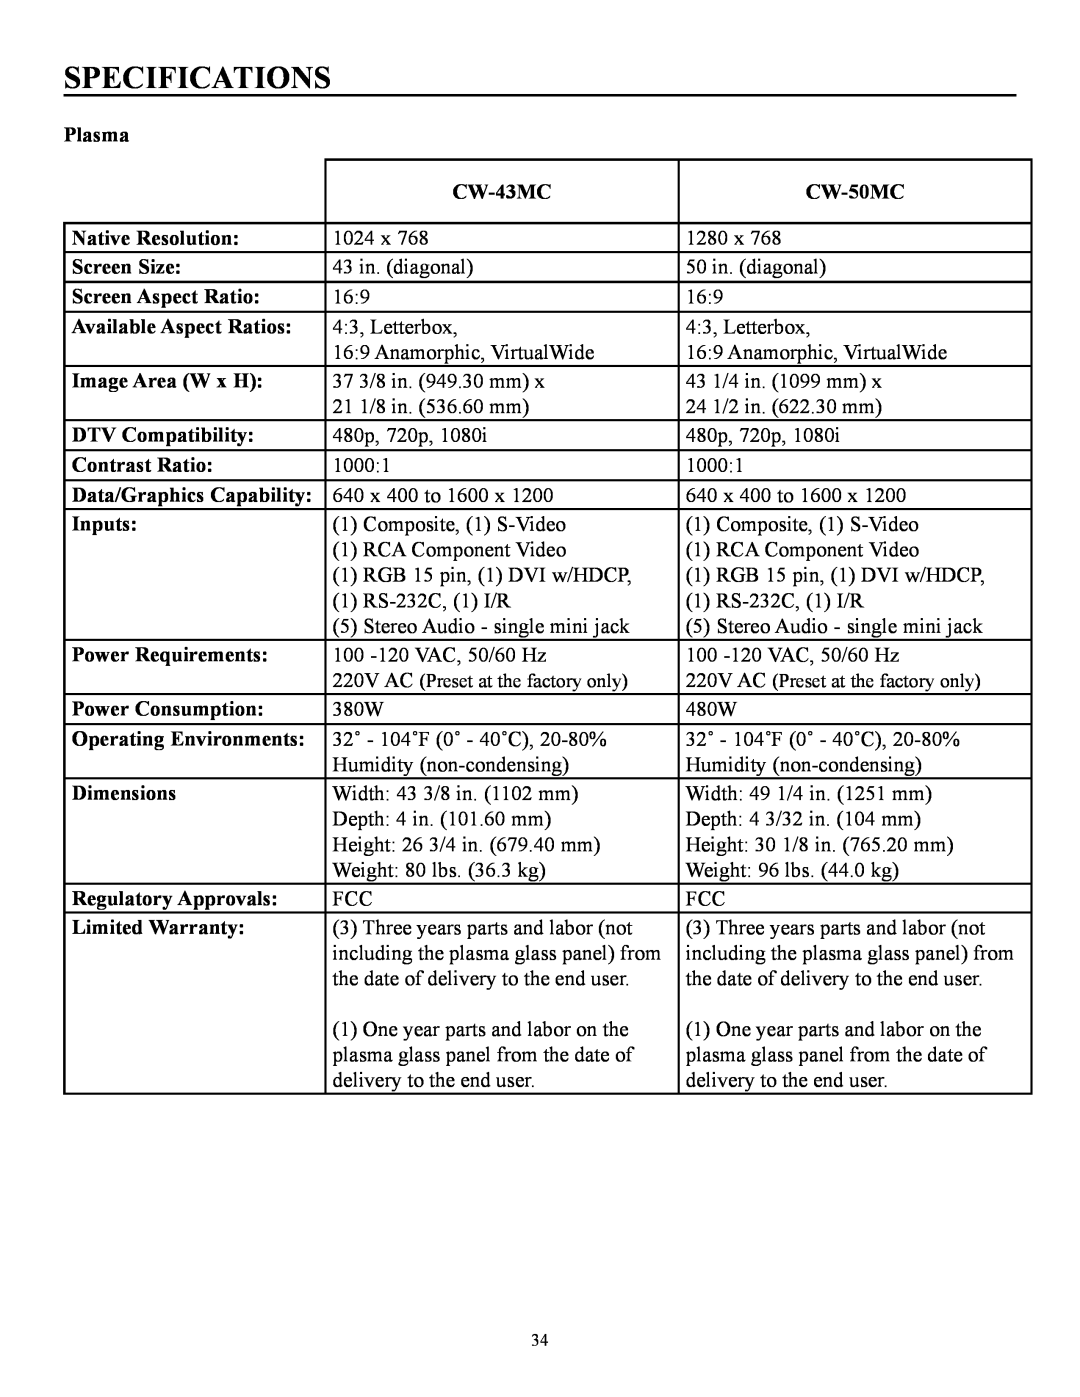 Runco CW-50MC manual Specifications 